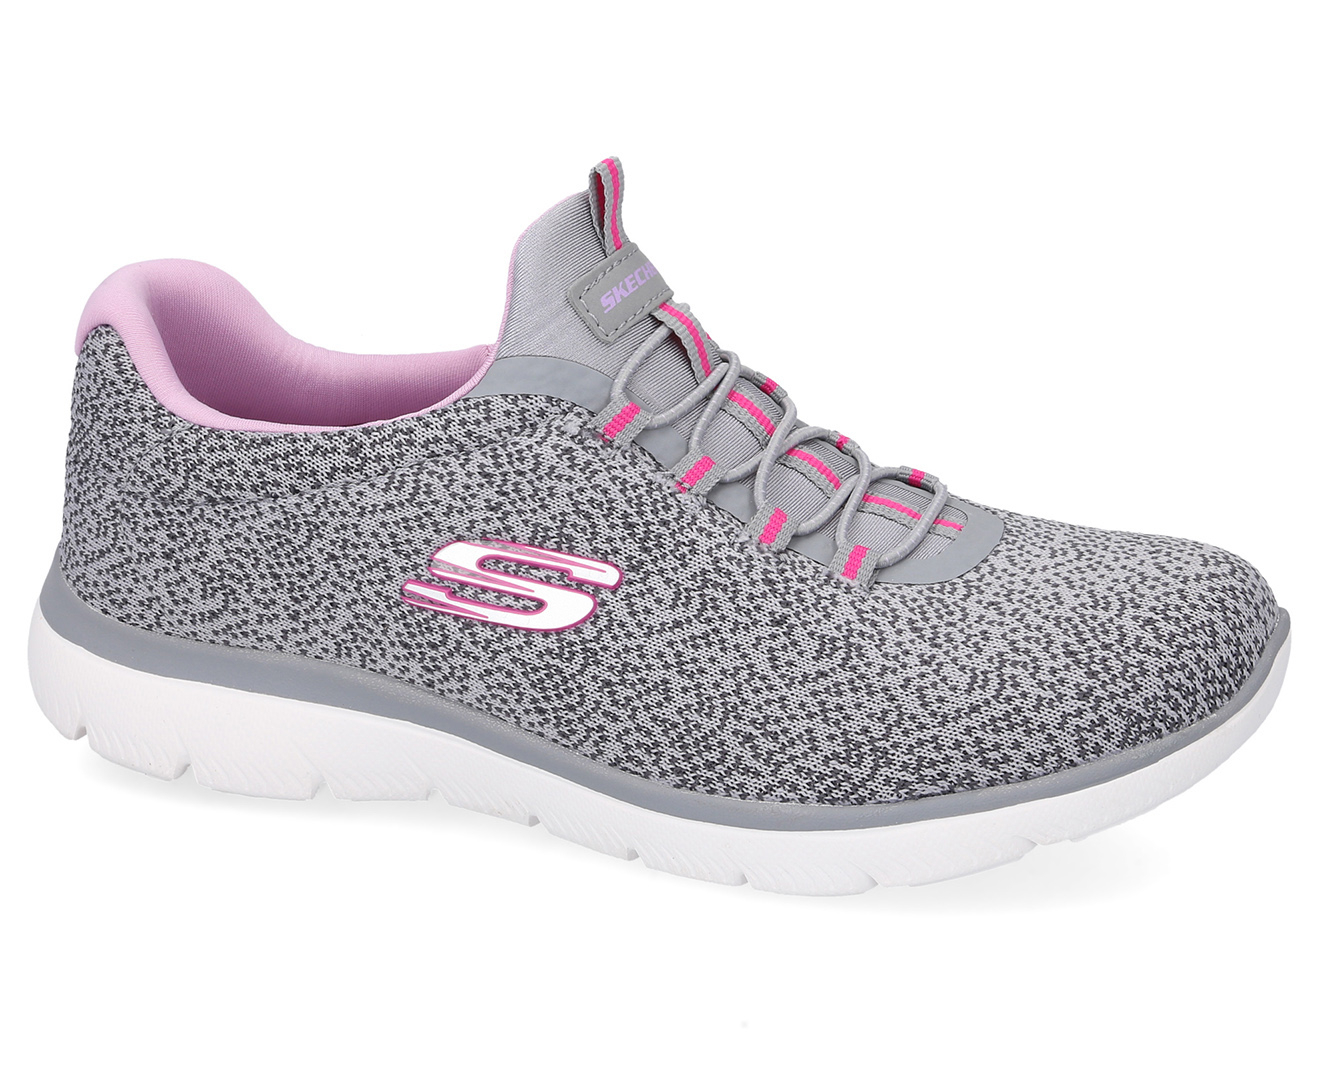 Skechers Women's Summits Fresh Take Sneakers - Grey/Lavender | Catch.com.au